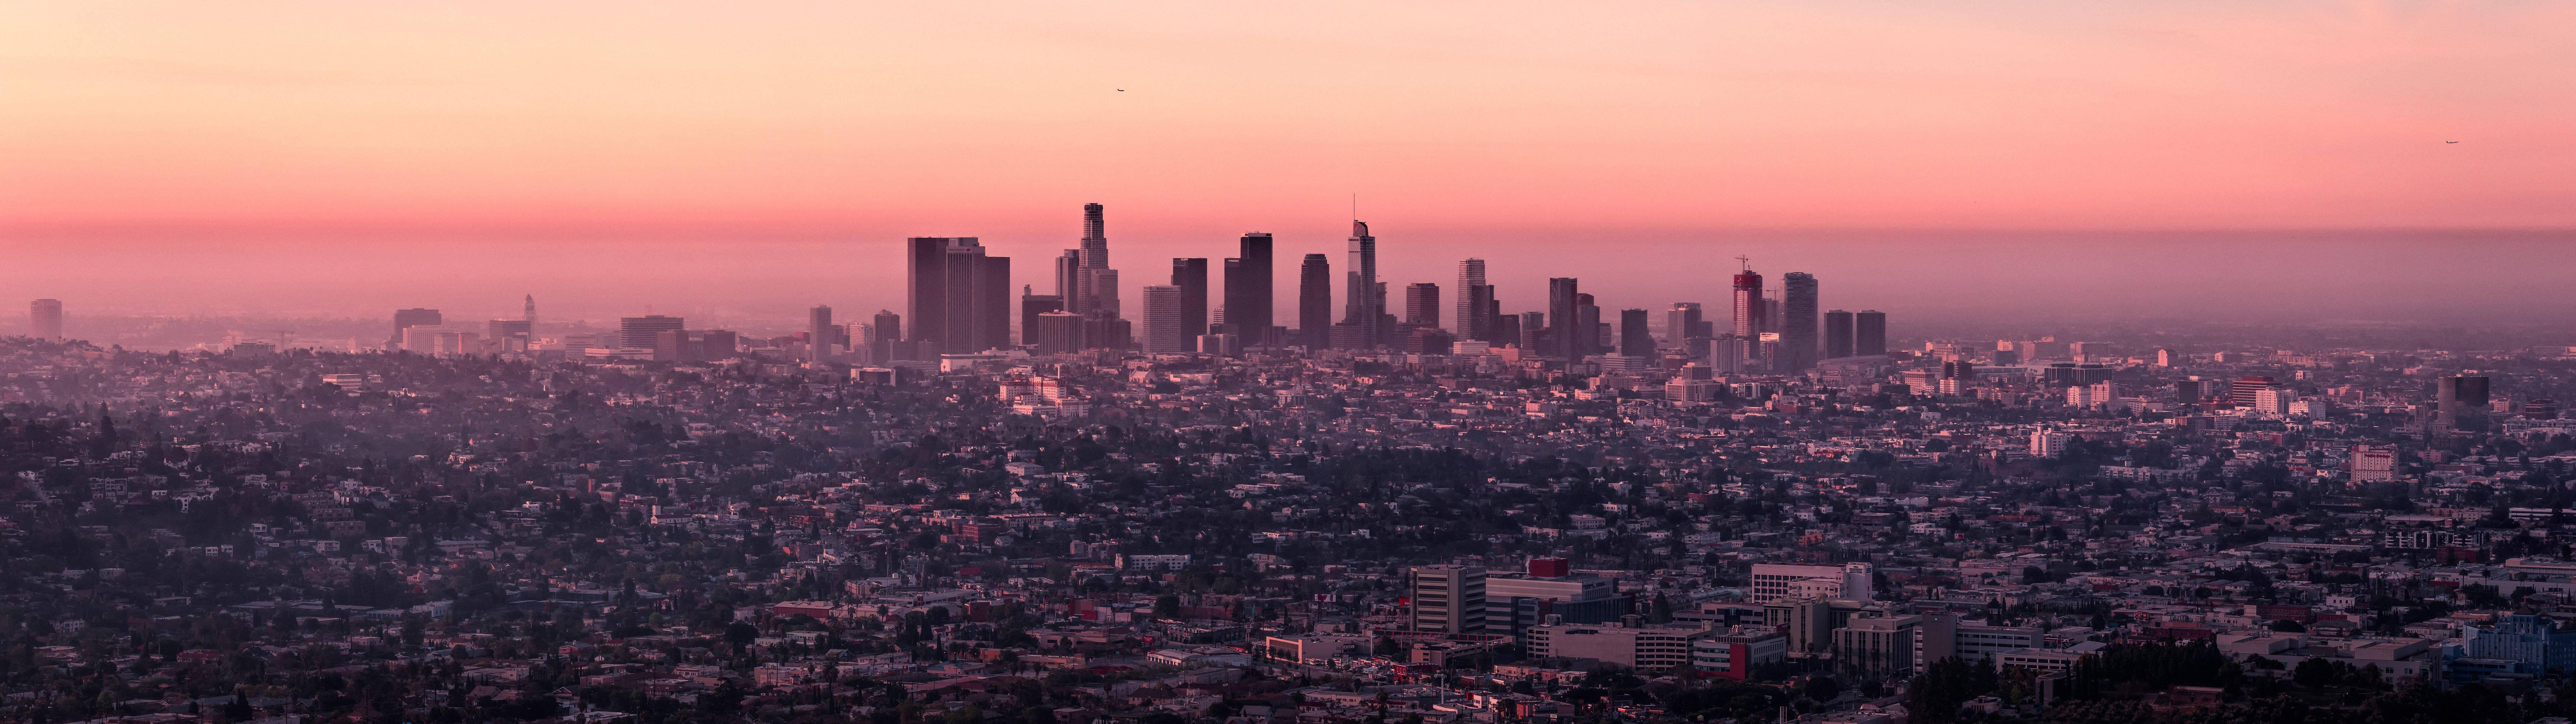 Panorama Of Los Angeles 4k Wallpaper